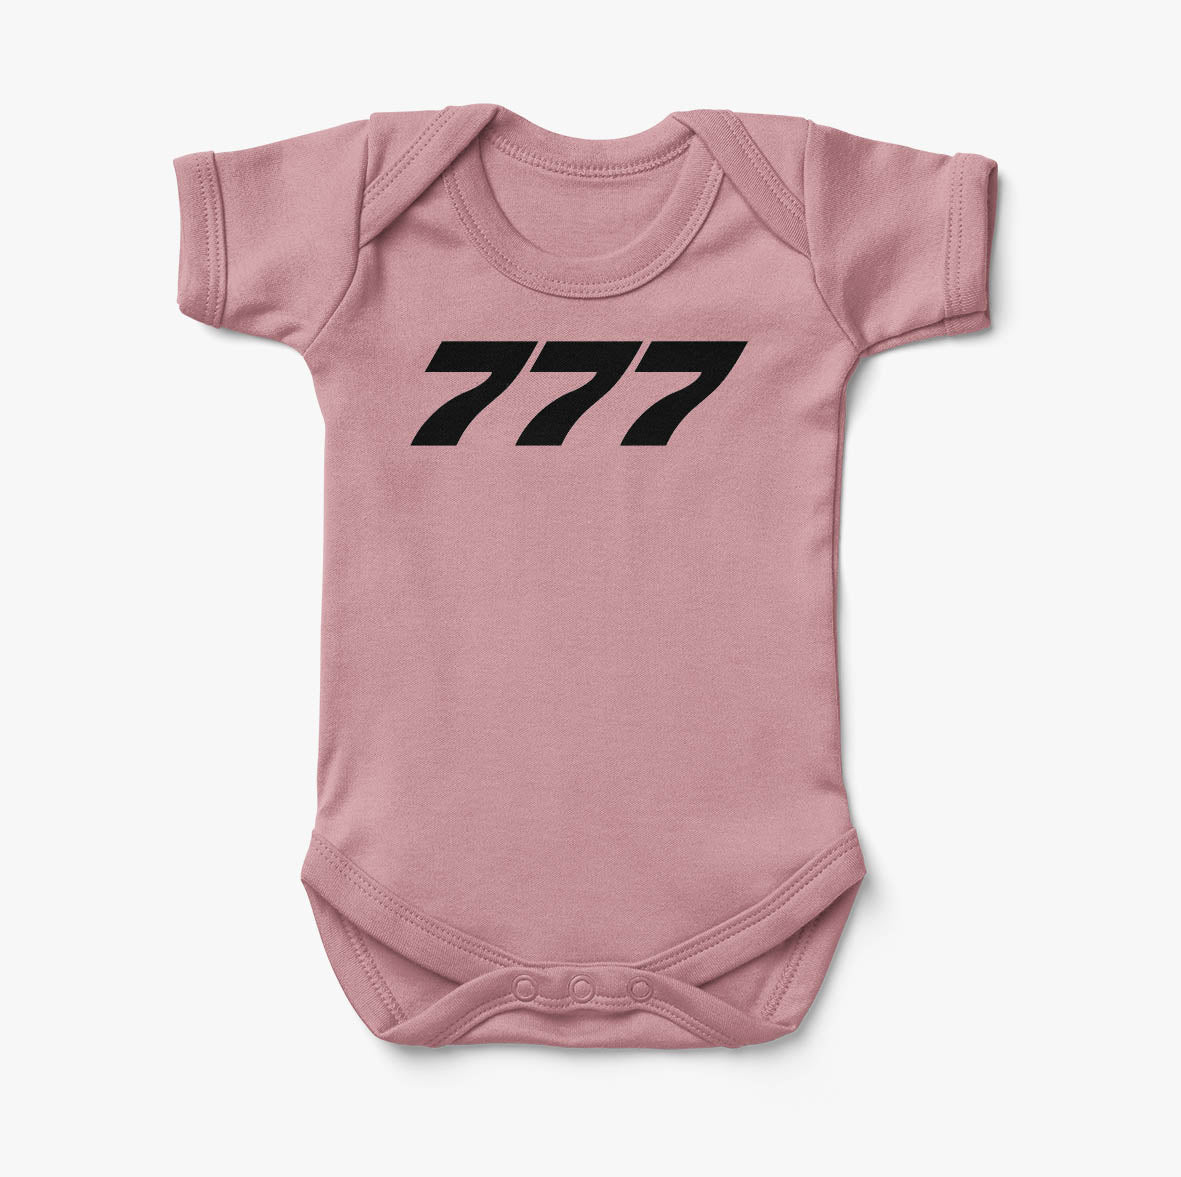 777 Flat Text Designed Baby Bodysuits